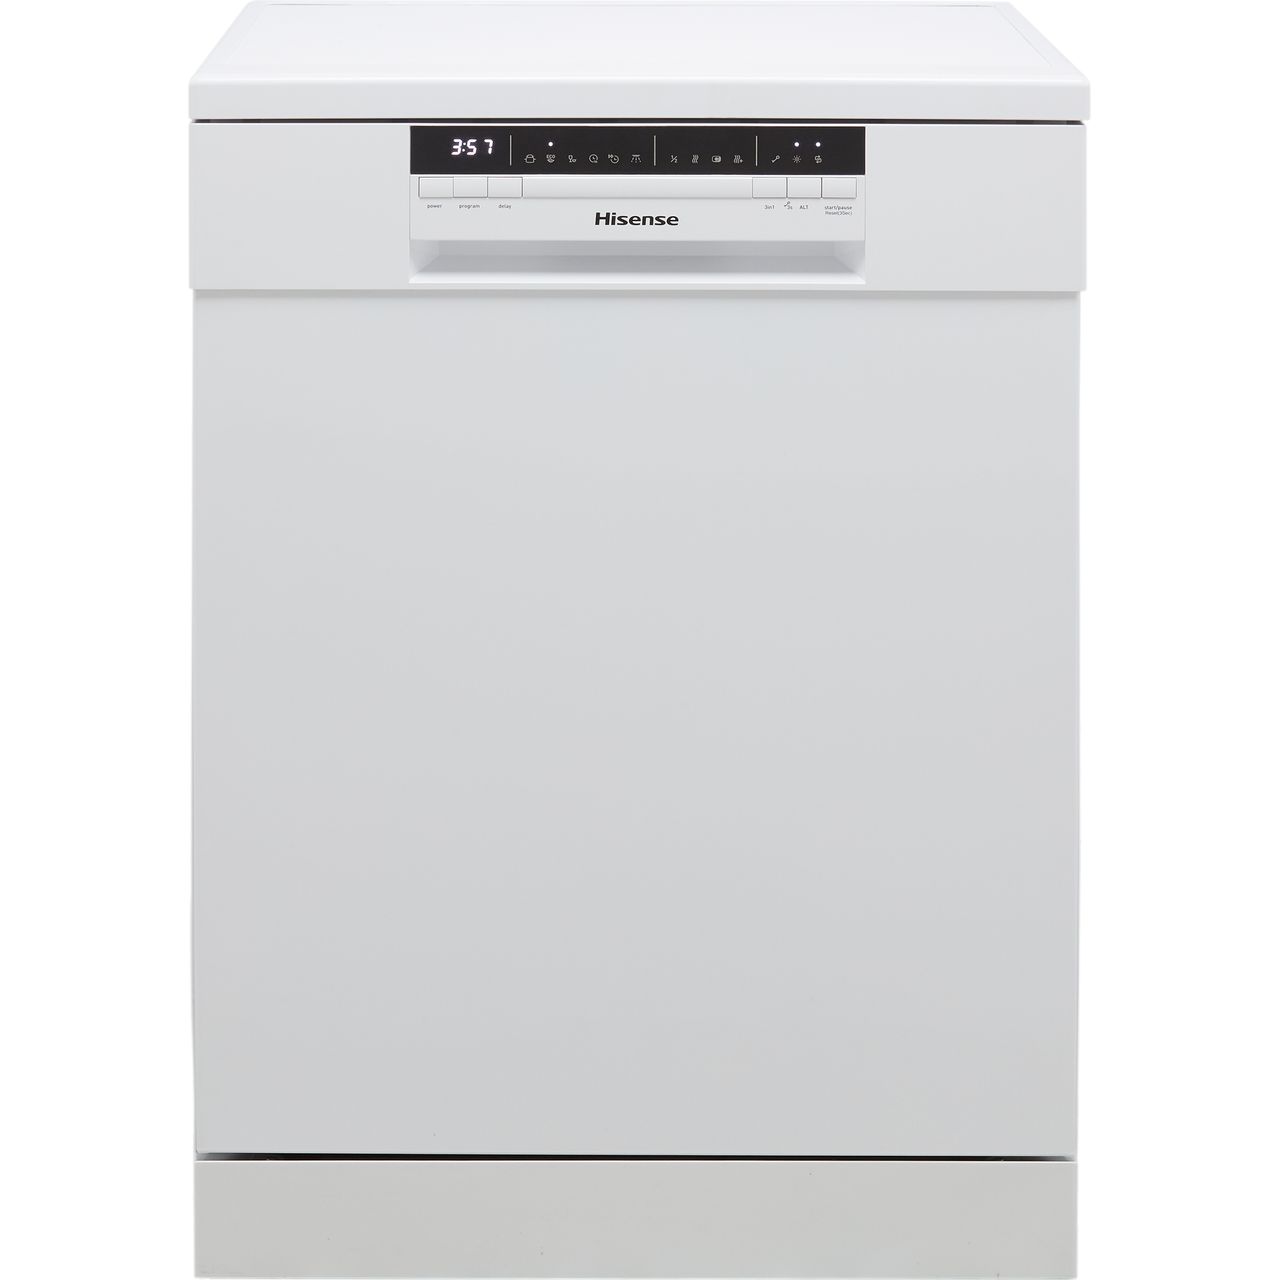 Hisense Standard Dishwasher - White - E Rated